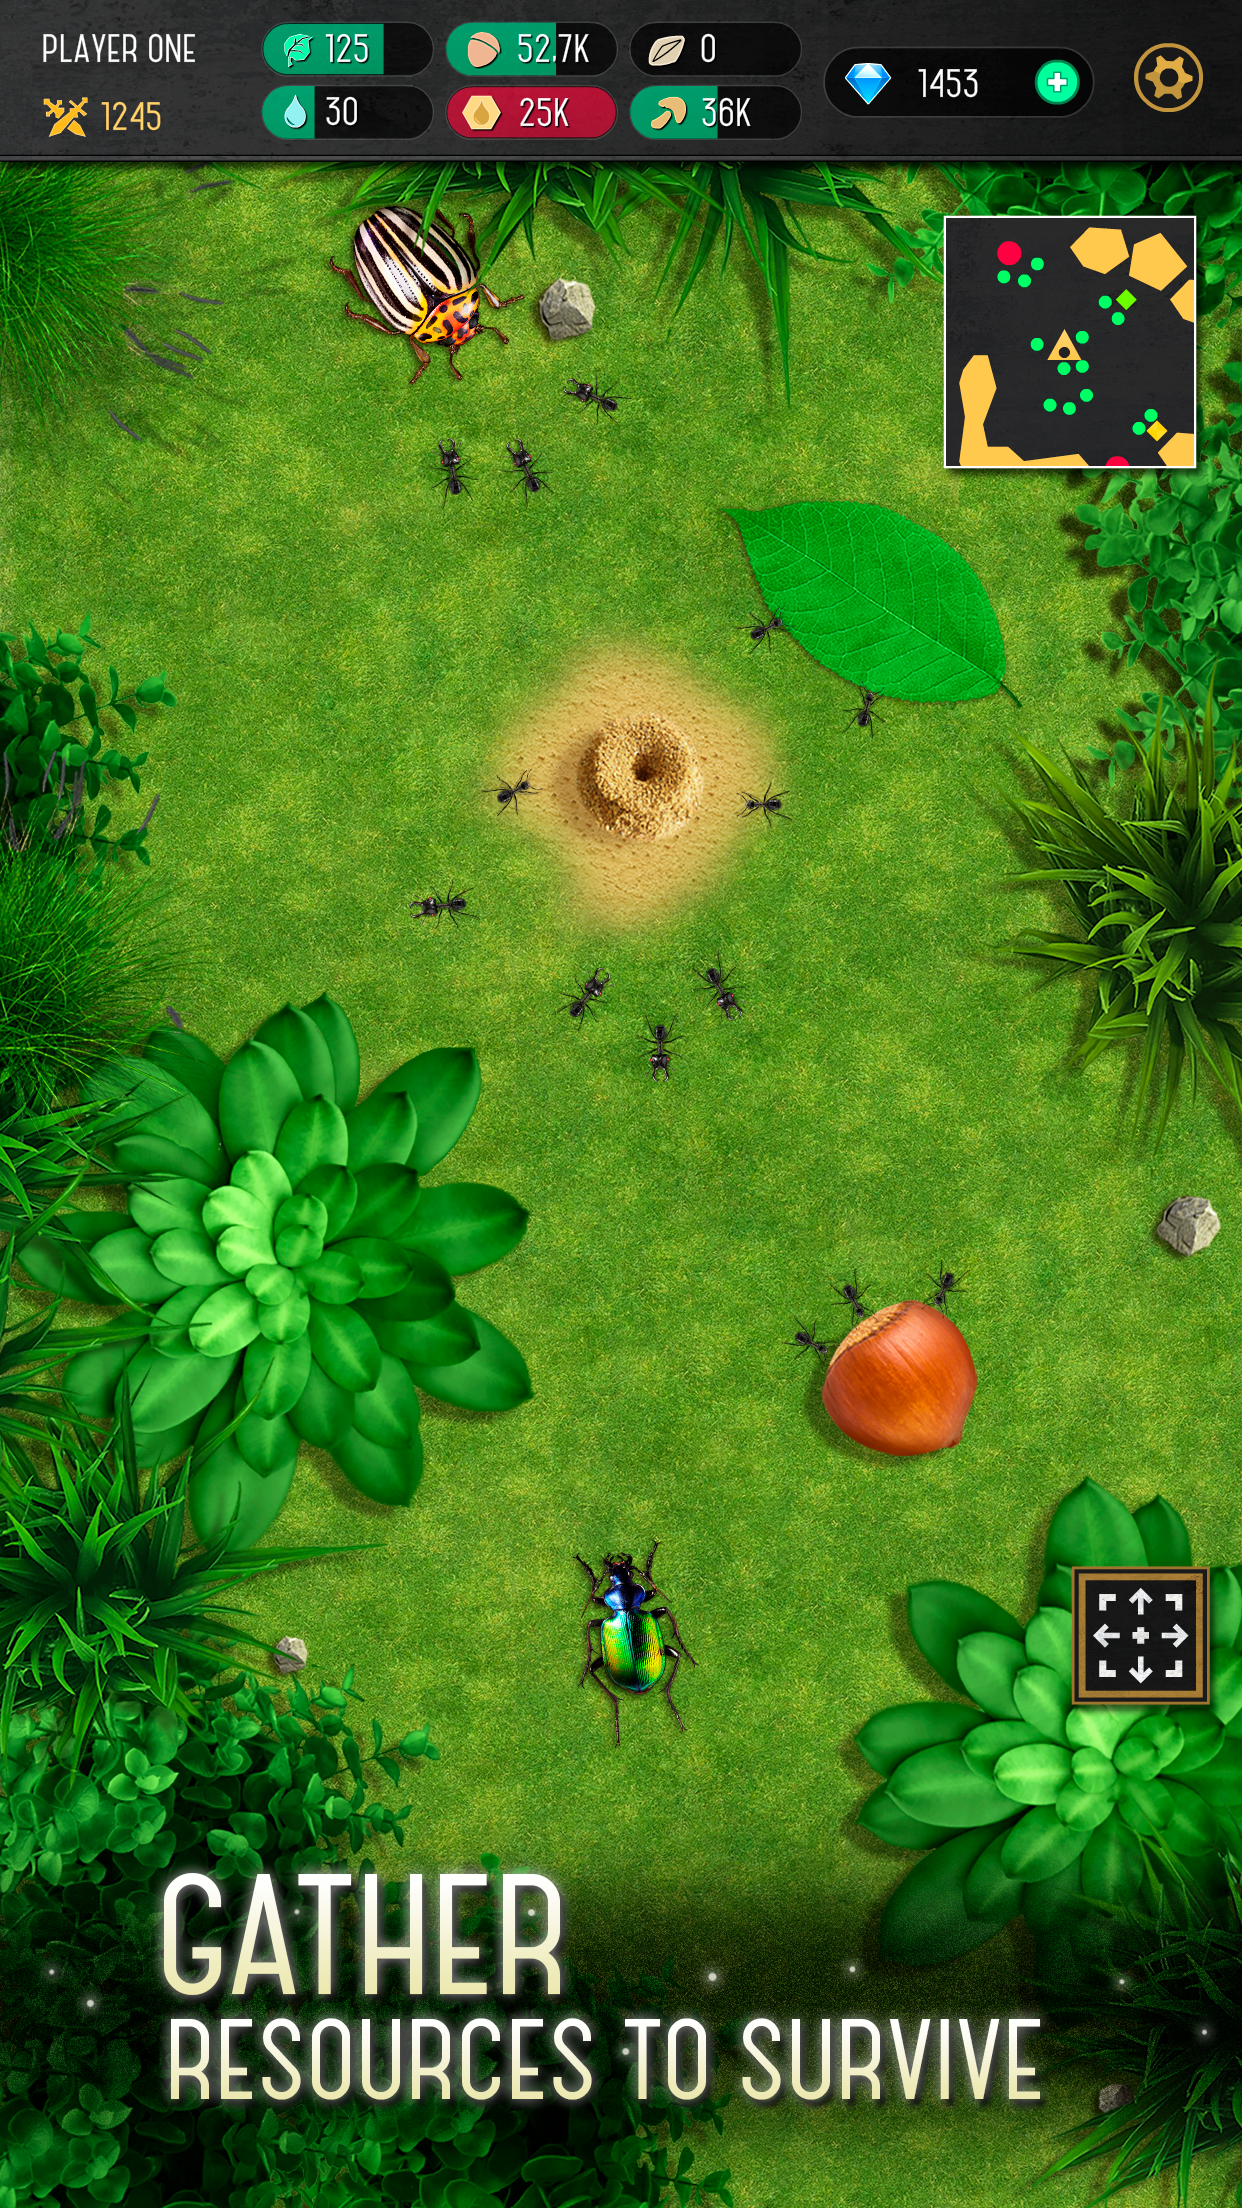 Screenshot of Ant Colony Simulator